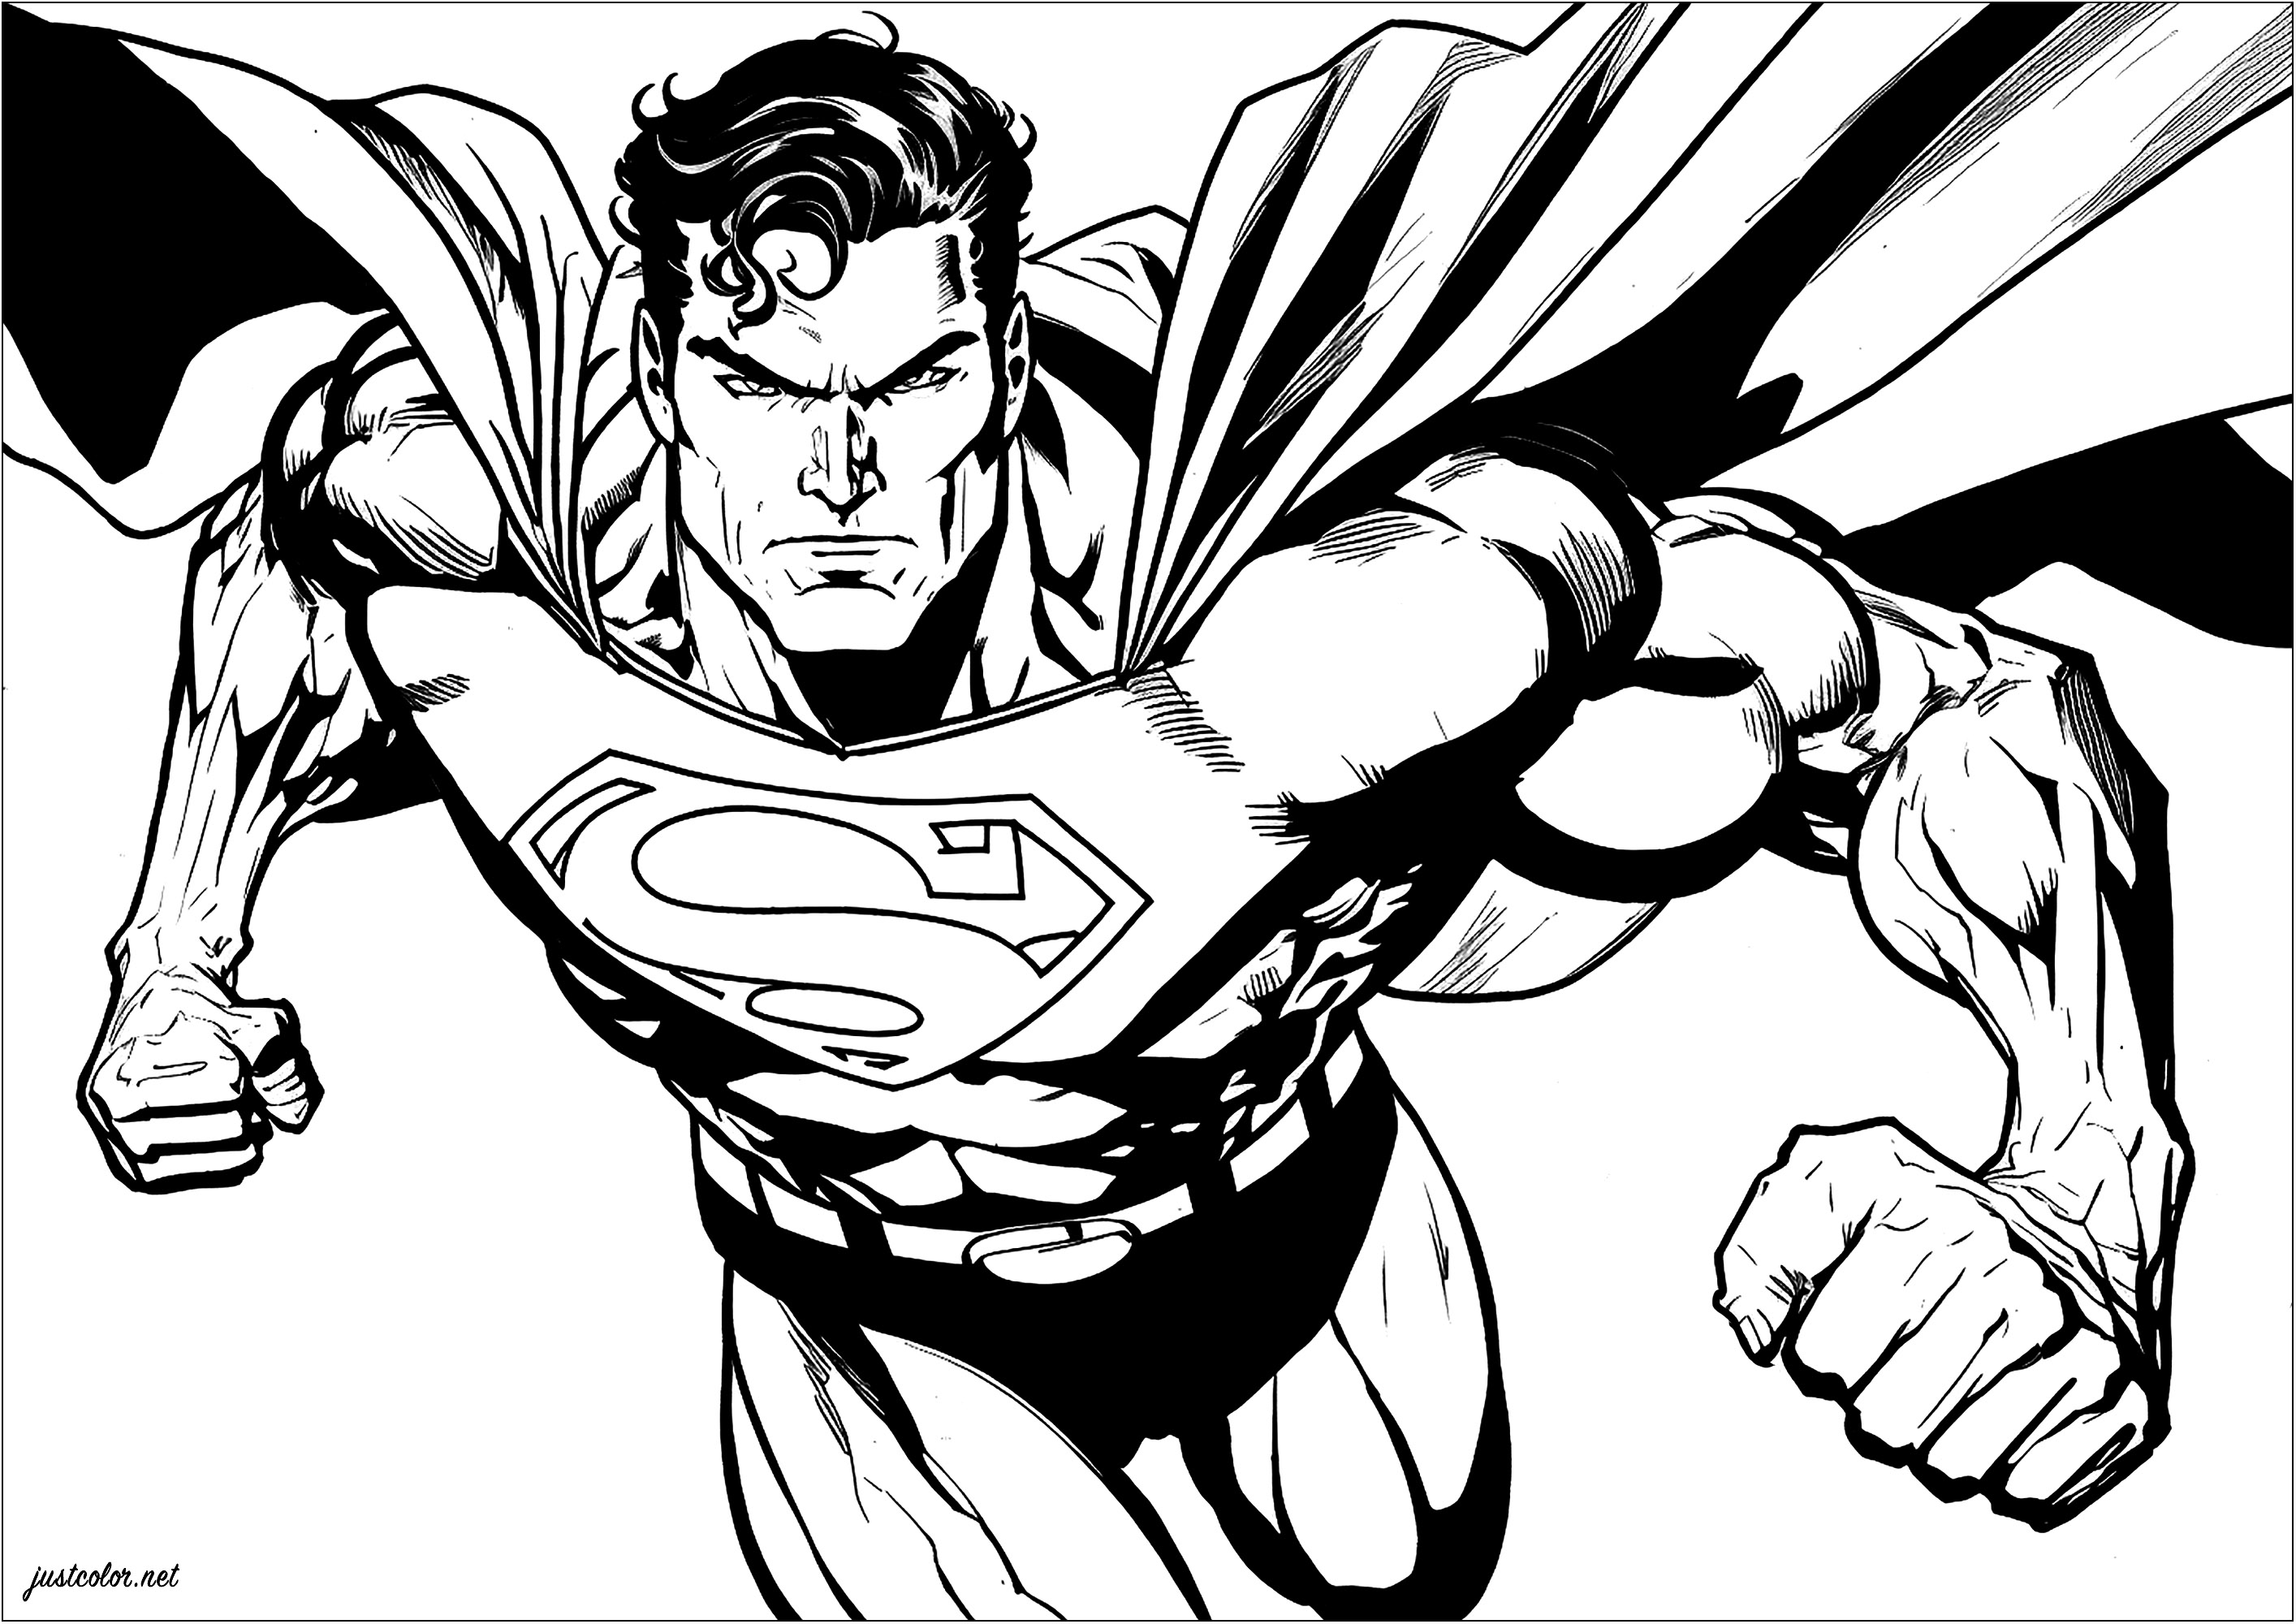 Flying superman - 1 - Image with : Superman, Dc comics